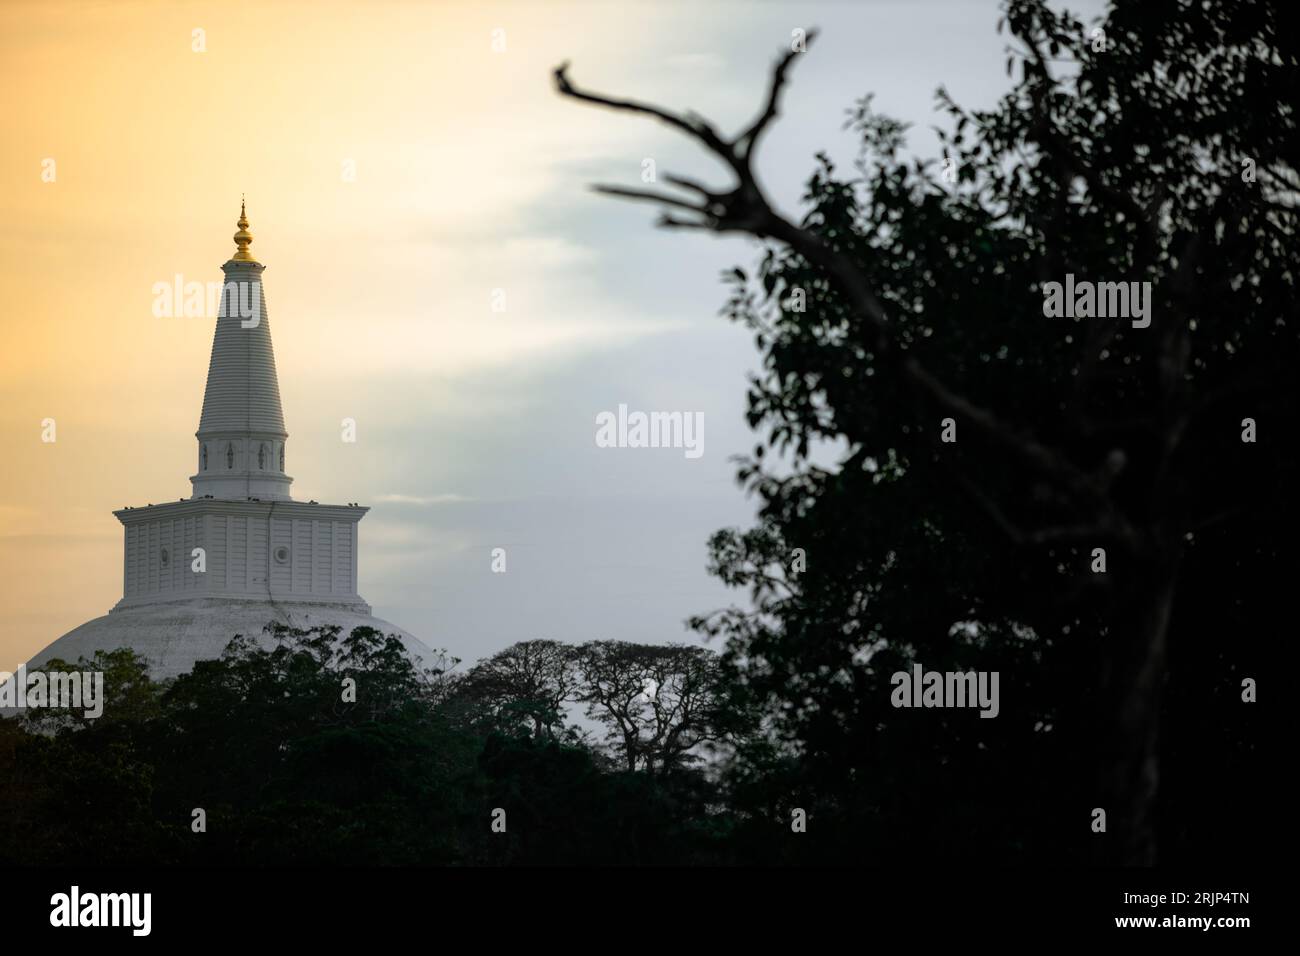 The Ruwanweli Maha Seya pagoda standing tall amongst a tree-covered landscape. Stock Photo